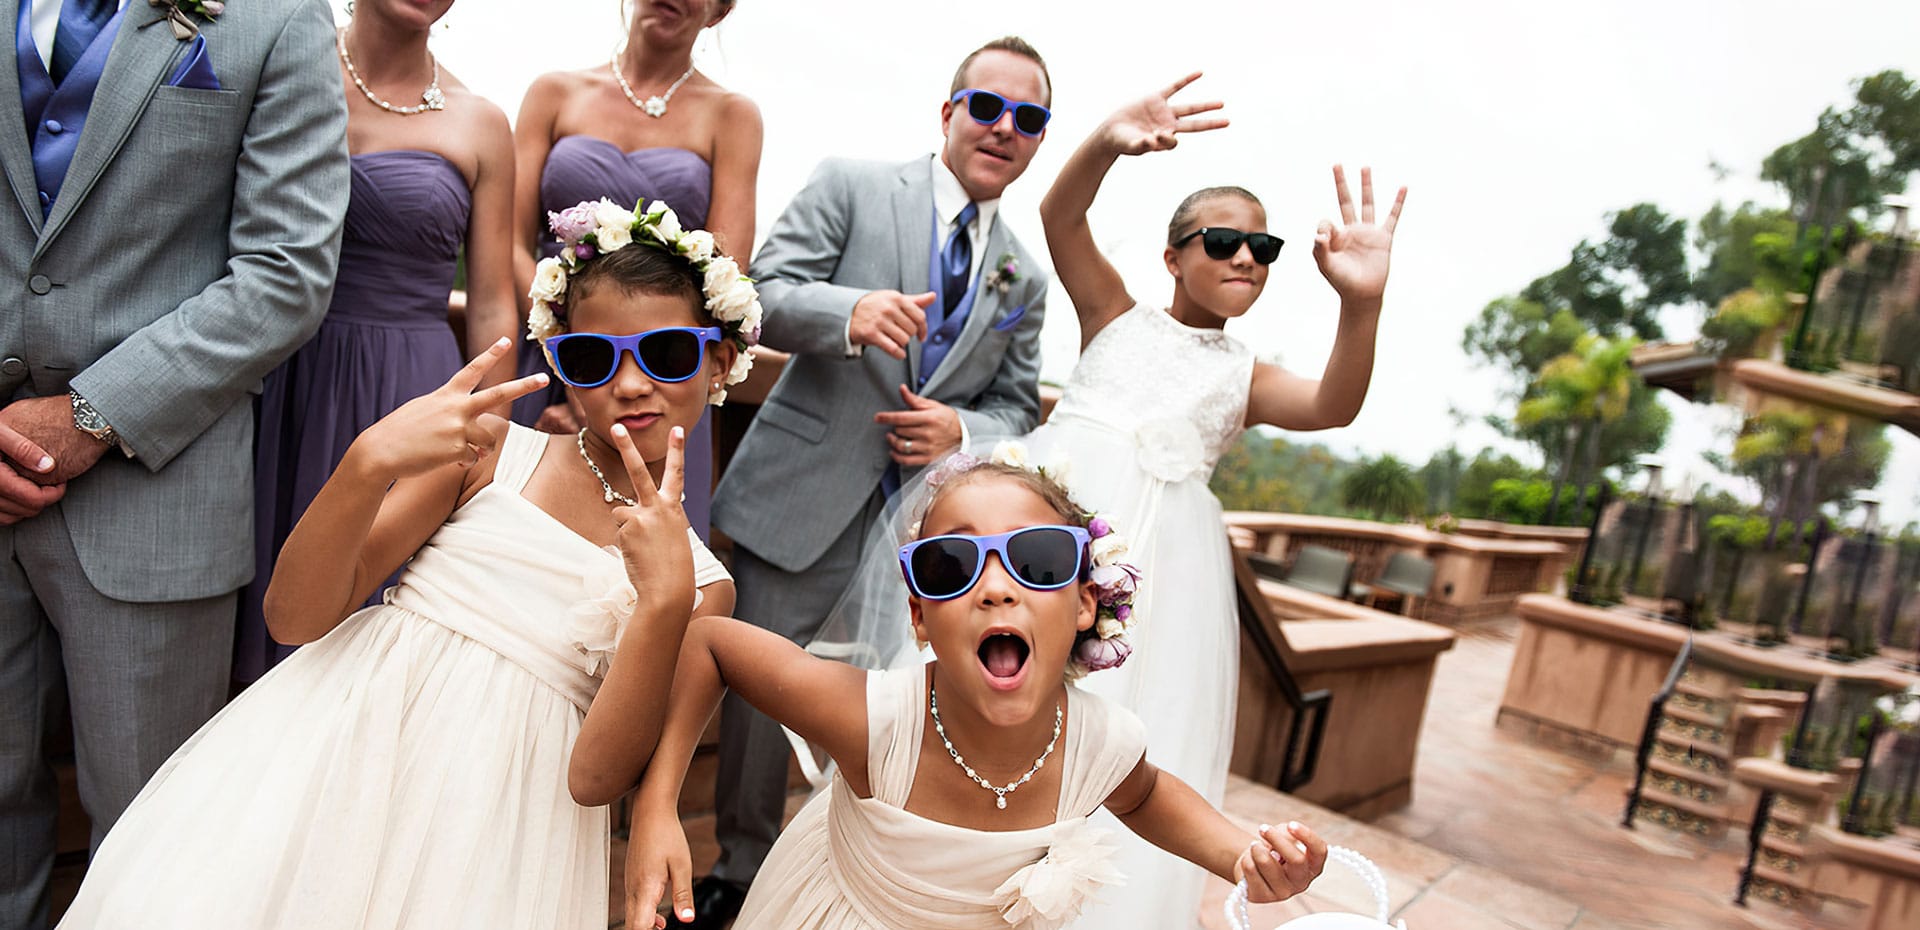 Fun Ways to Incorporate Kids in Your Wedding. Furbabies too!